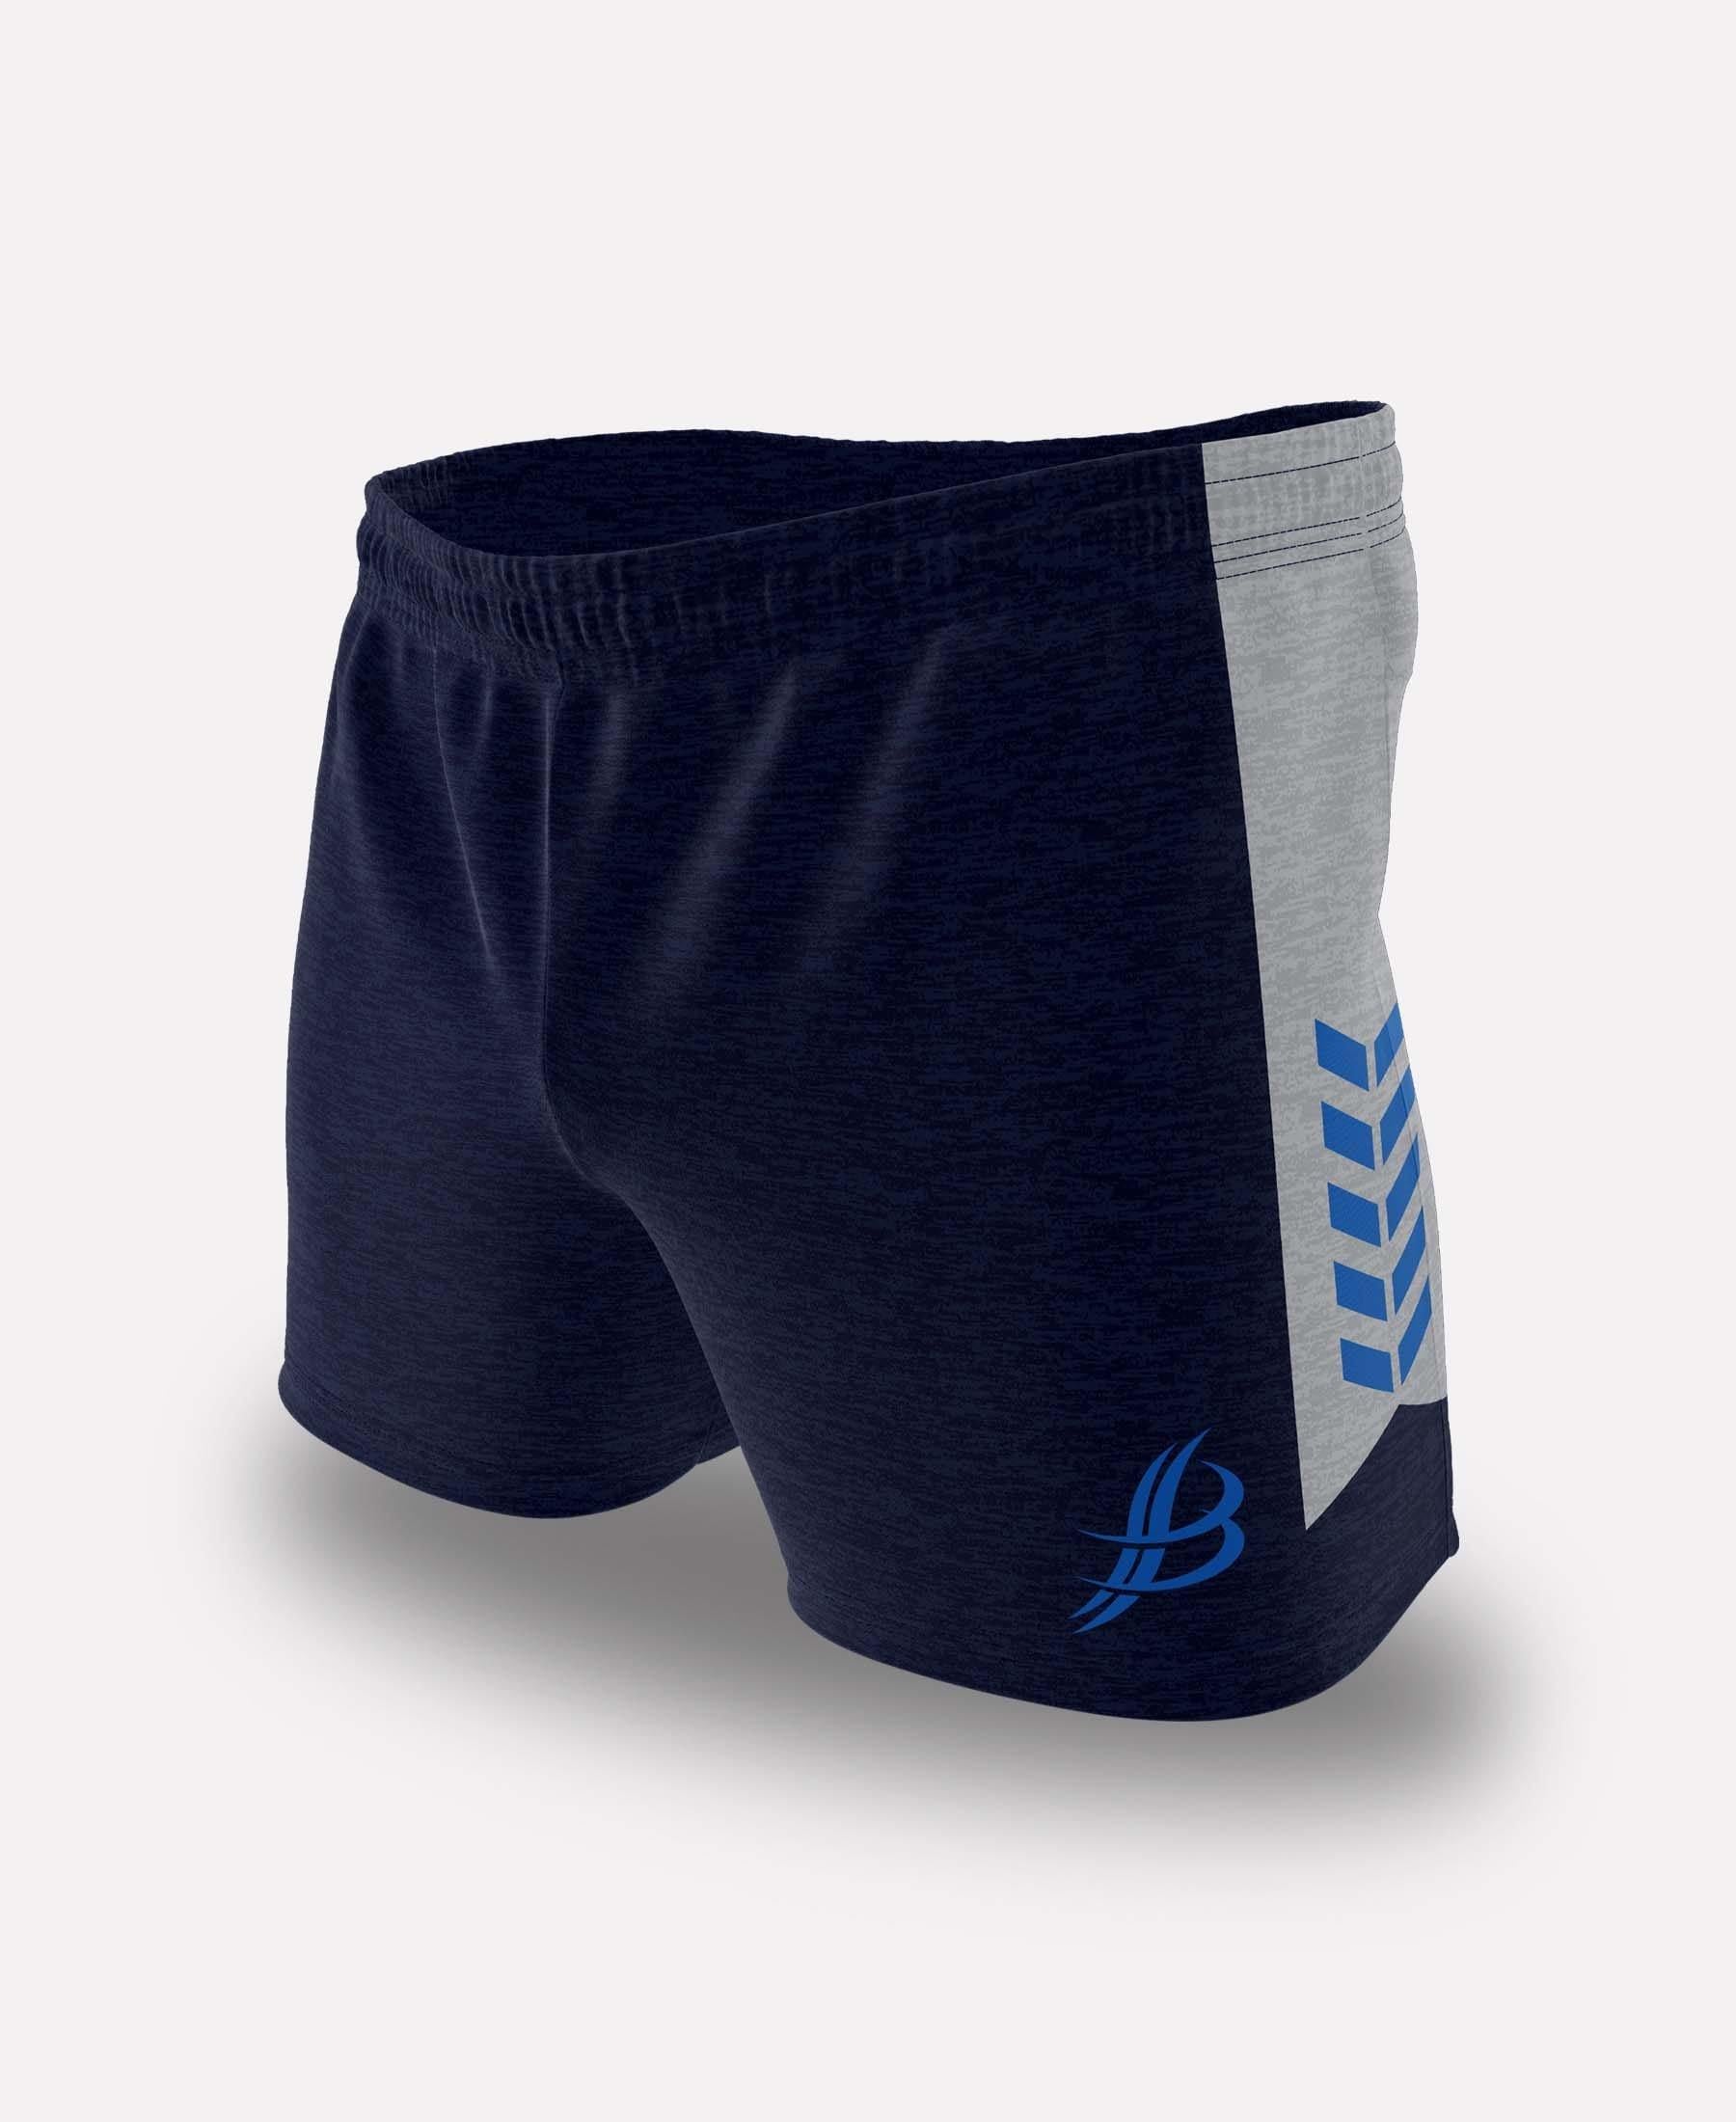 BUA20 Shorts (Navy/Grey/Royal) - Bourke Sports Limited